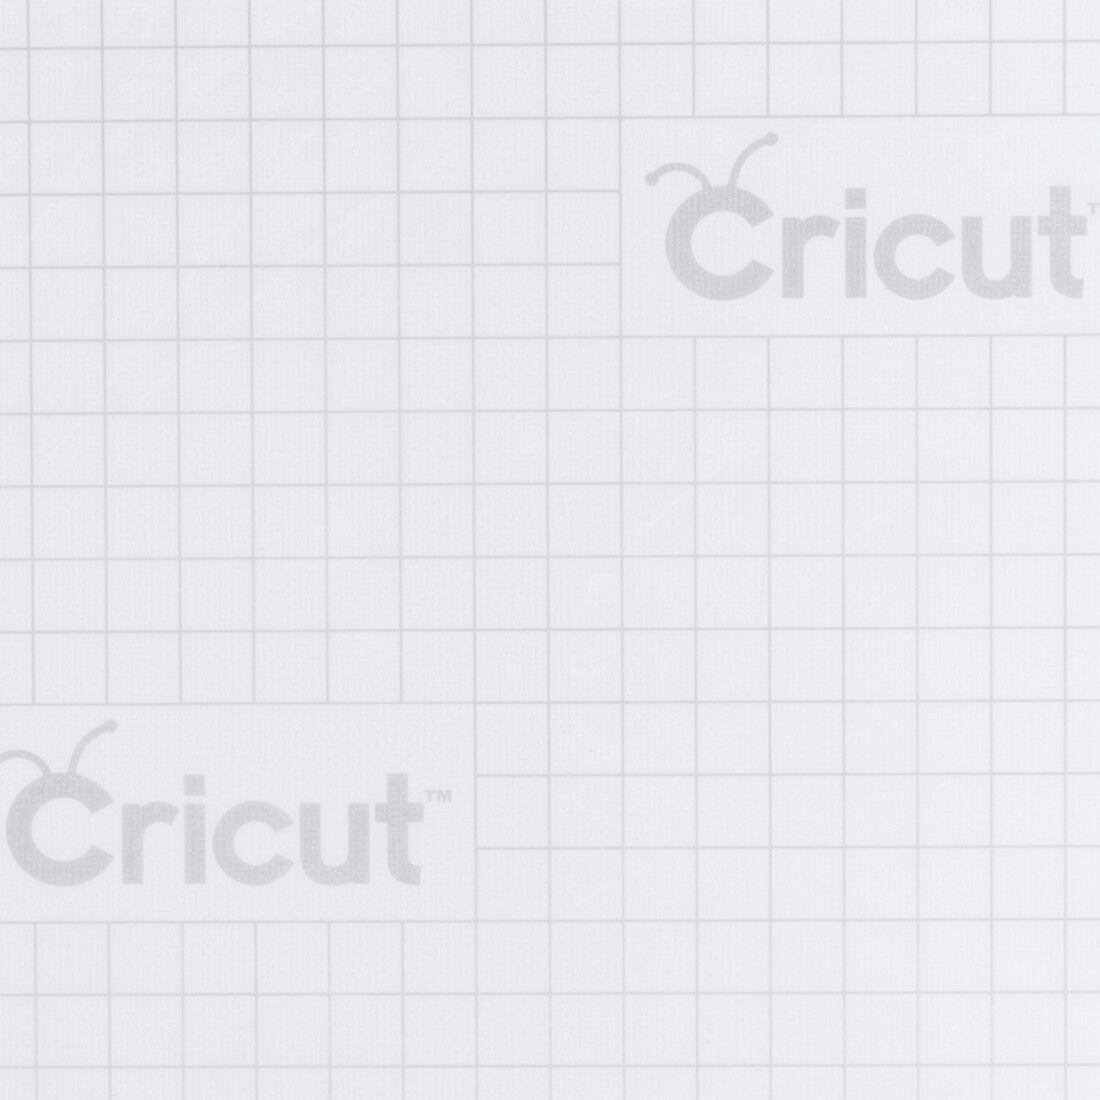 Cricut Transfer Tape 21 ft - Essential Supplies for Vinyl Craft